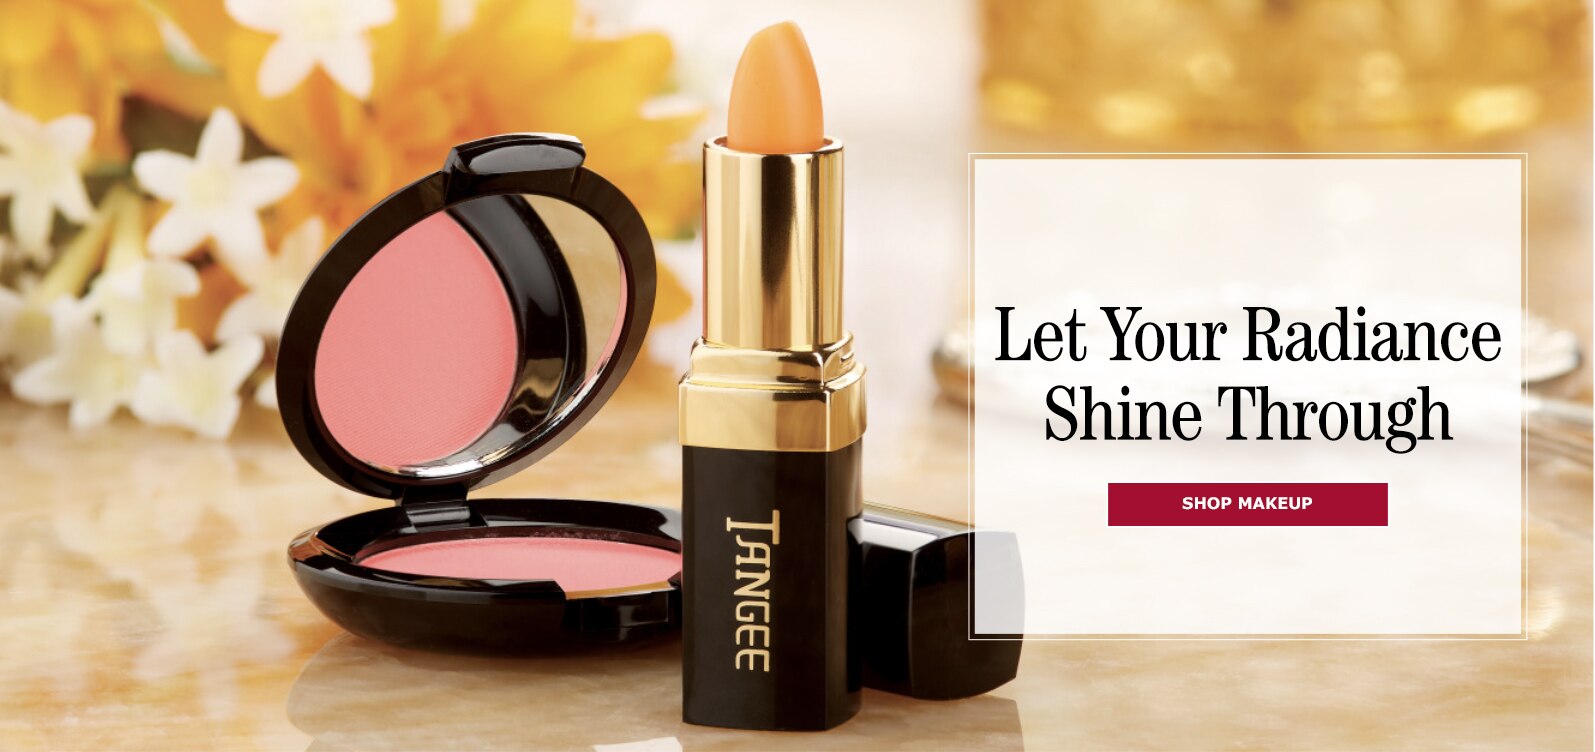 Let Your Radiance Shine Through. Shop Makeup.